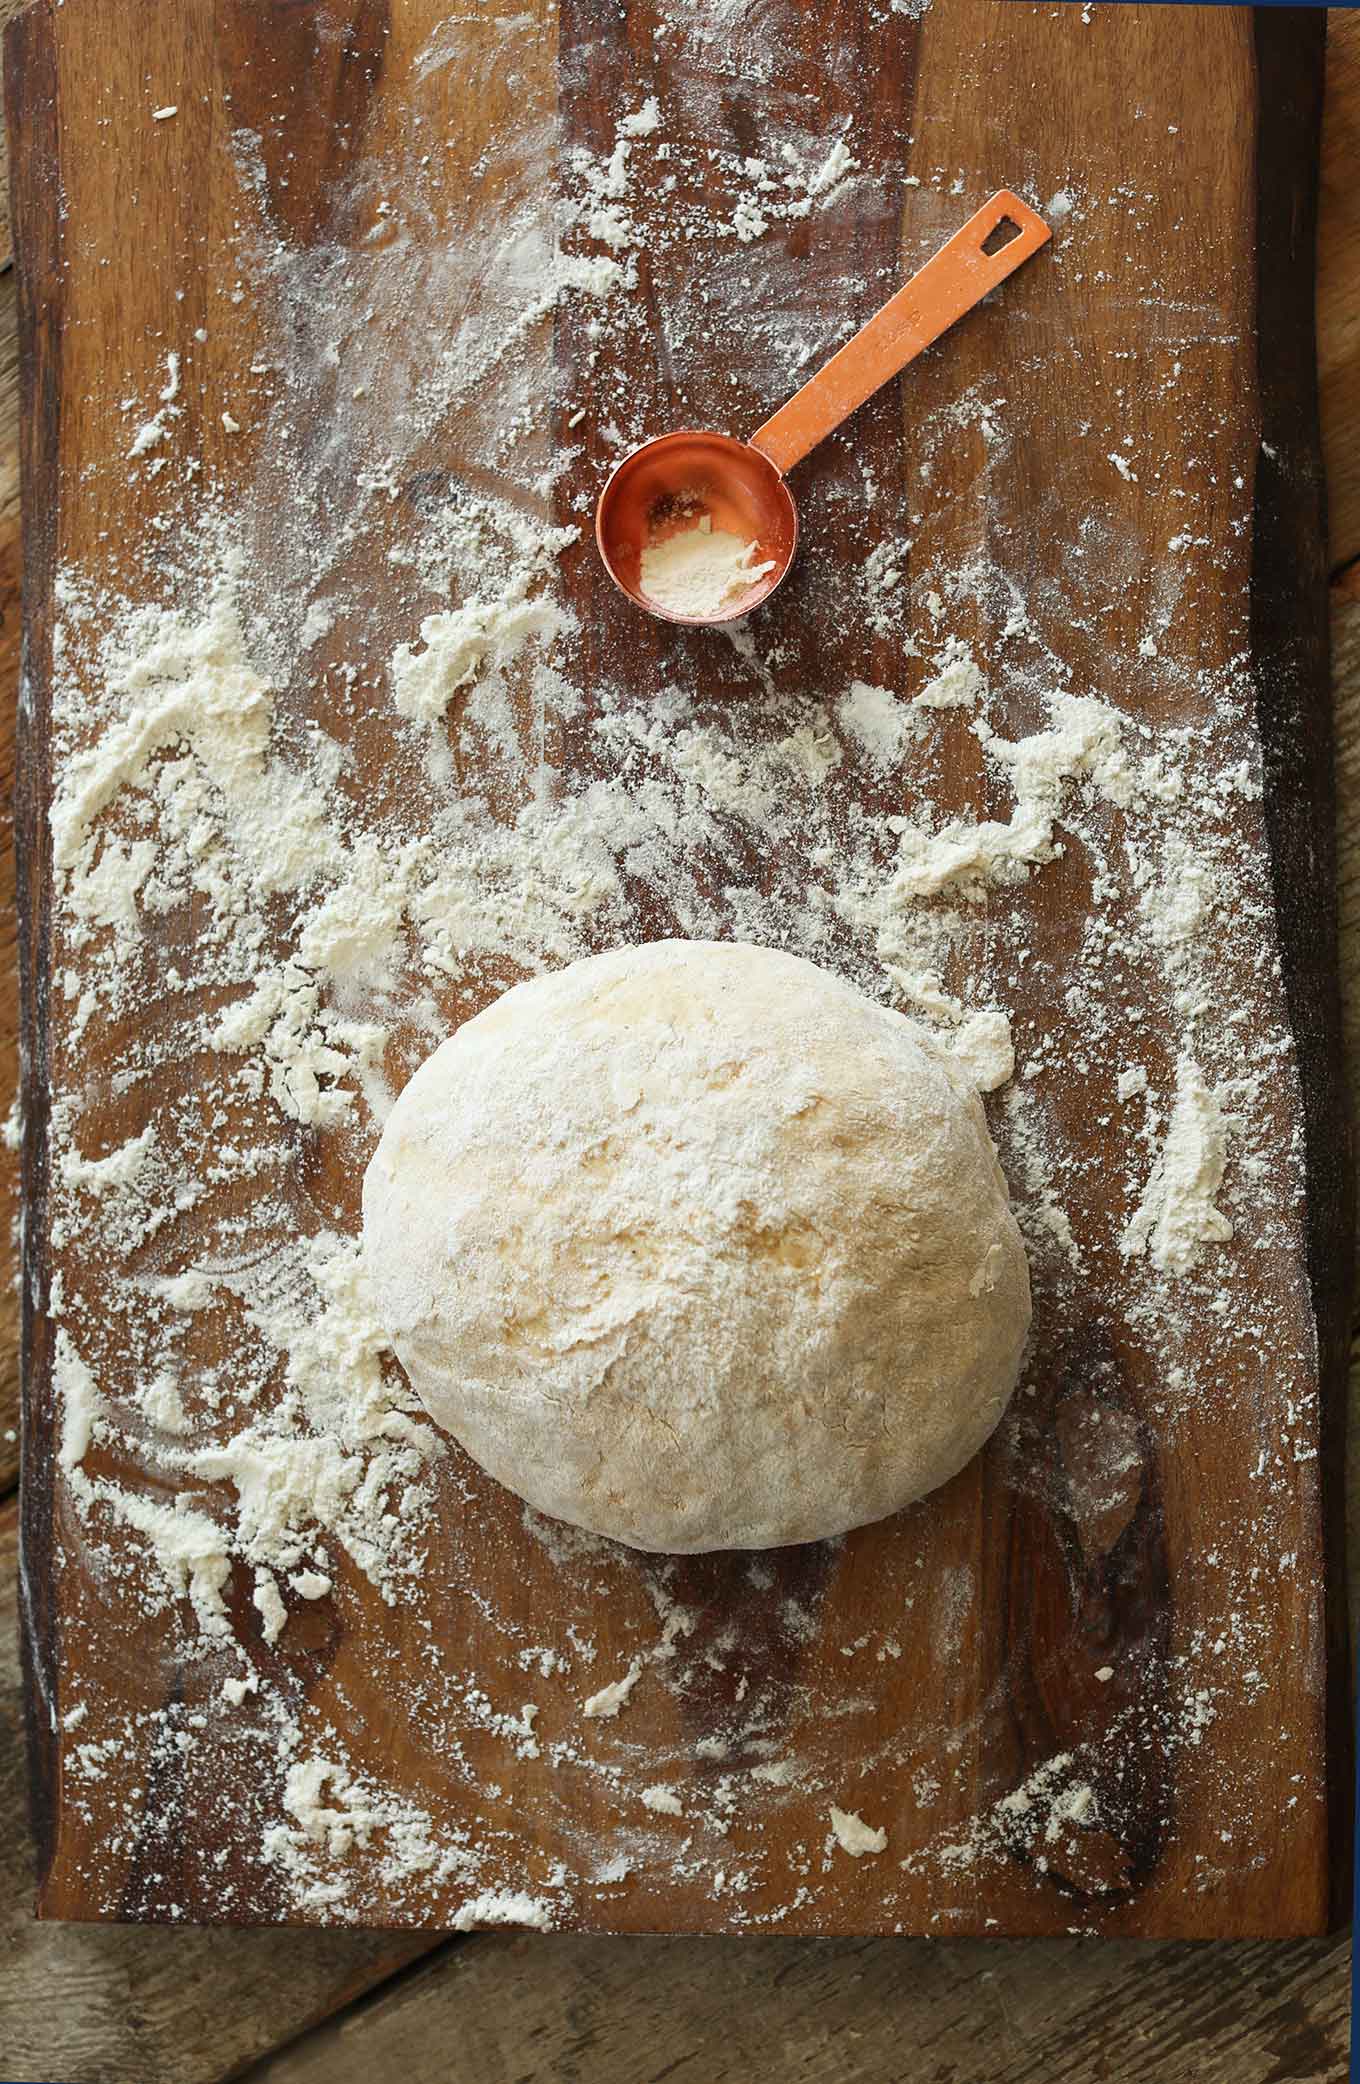 Cutting board with ball of floured dough for making Vegan Pumpkin Cinnamon Rolls